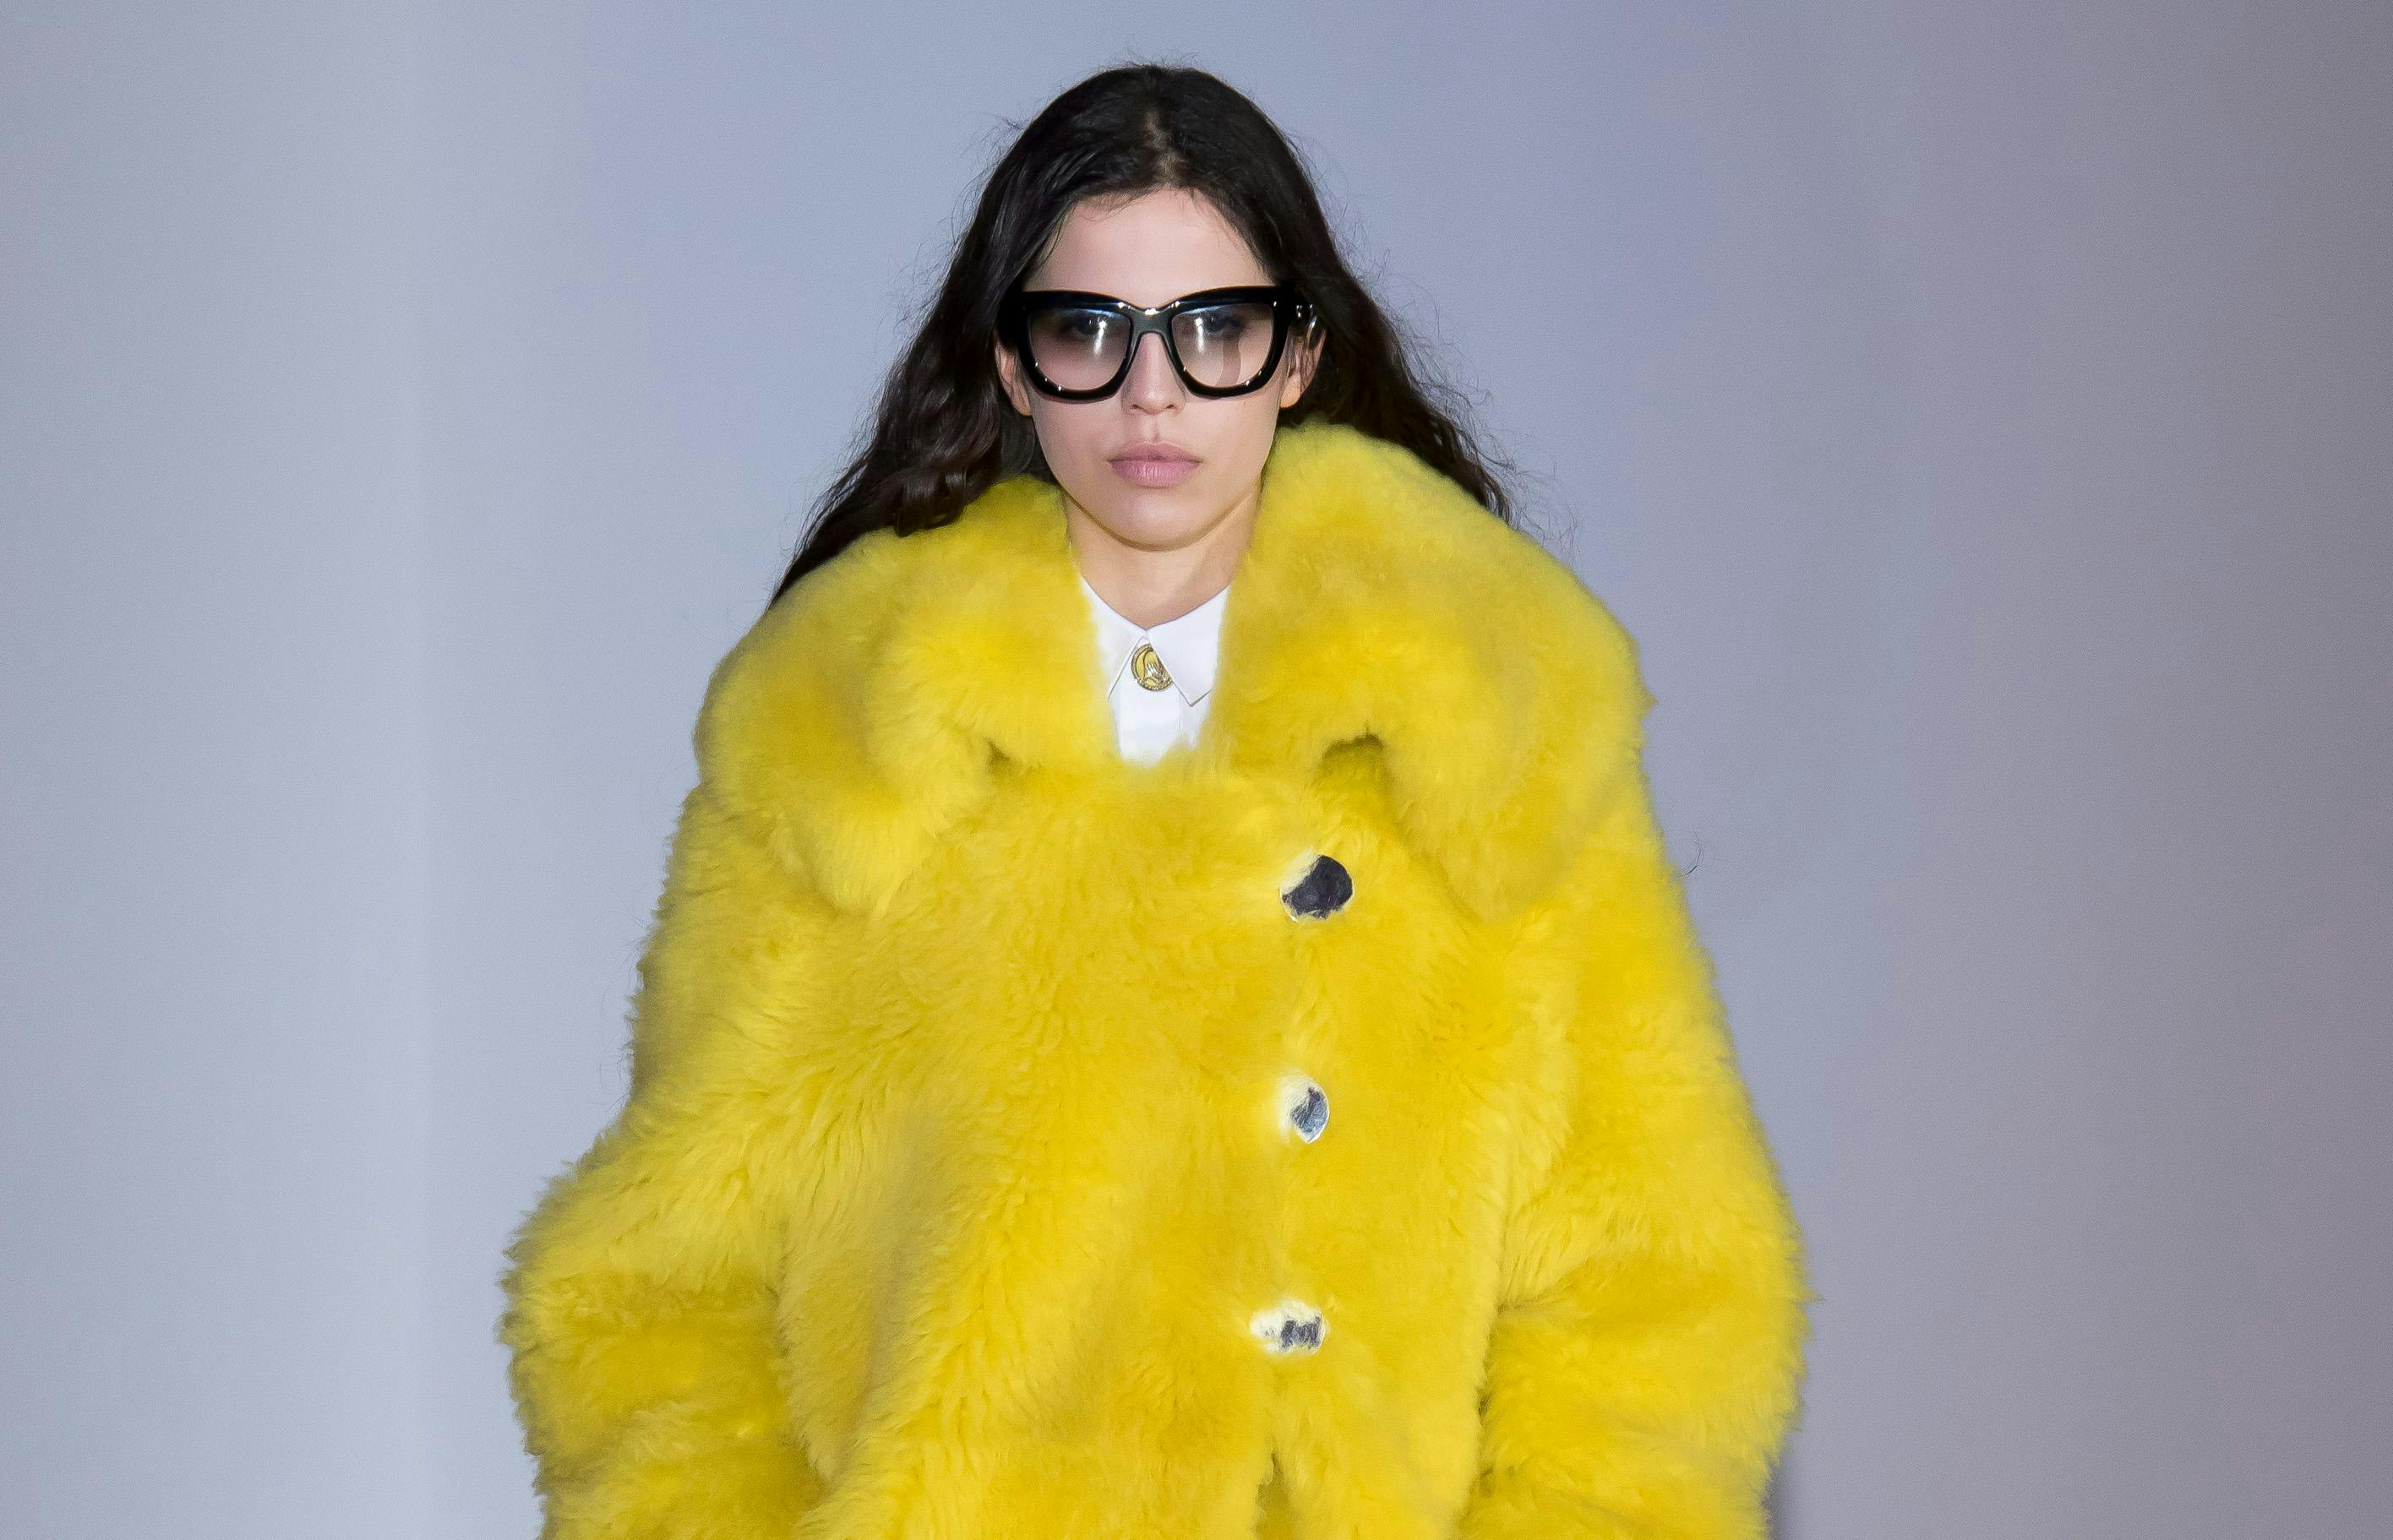 clothing apparel fur sunglasses accessories accessory coat person human